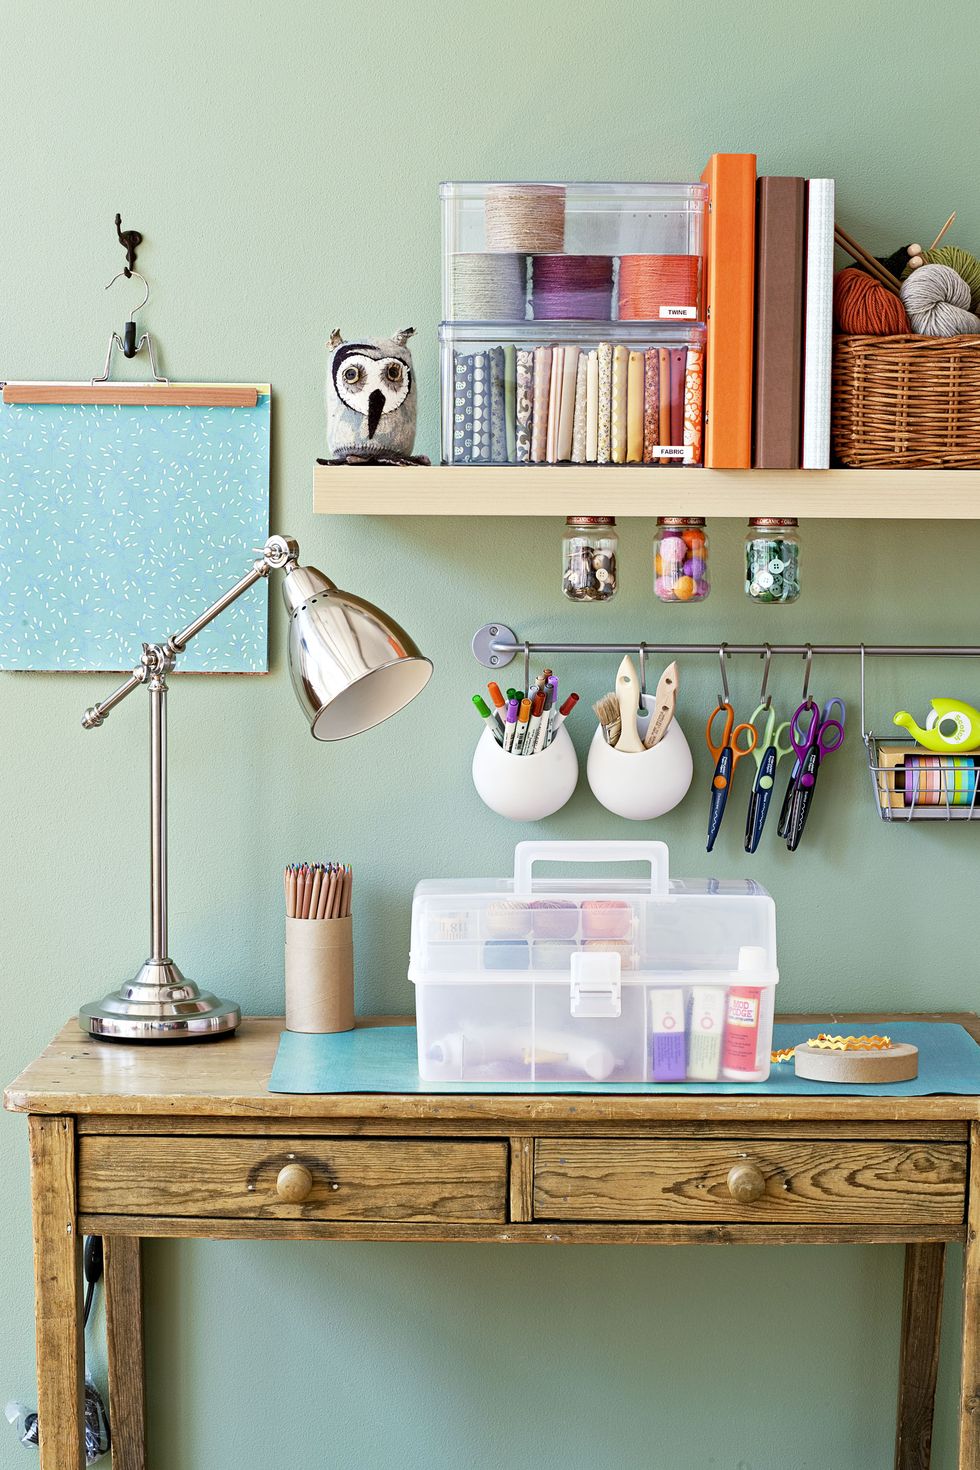 15+ Under-Desk Storage Ideas with Top Picks & DIY Guide